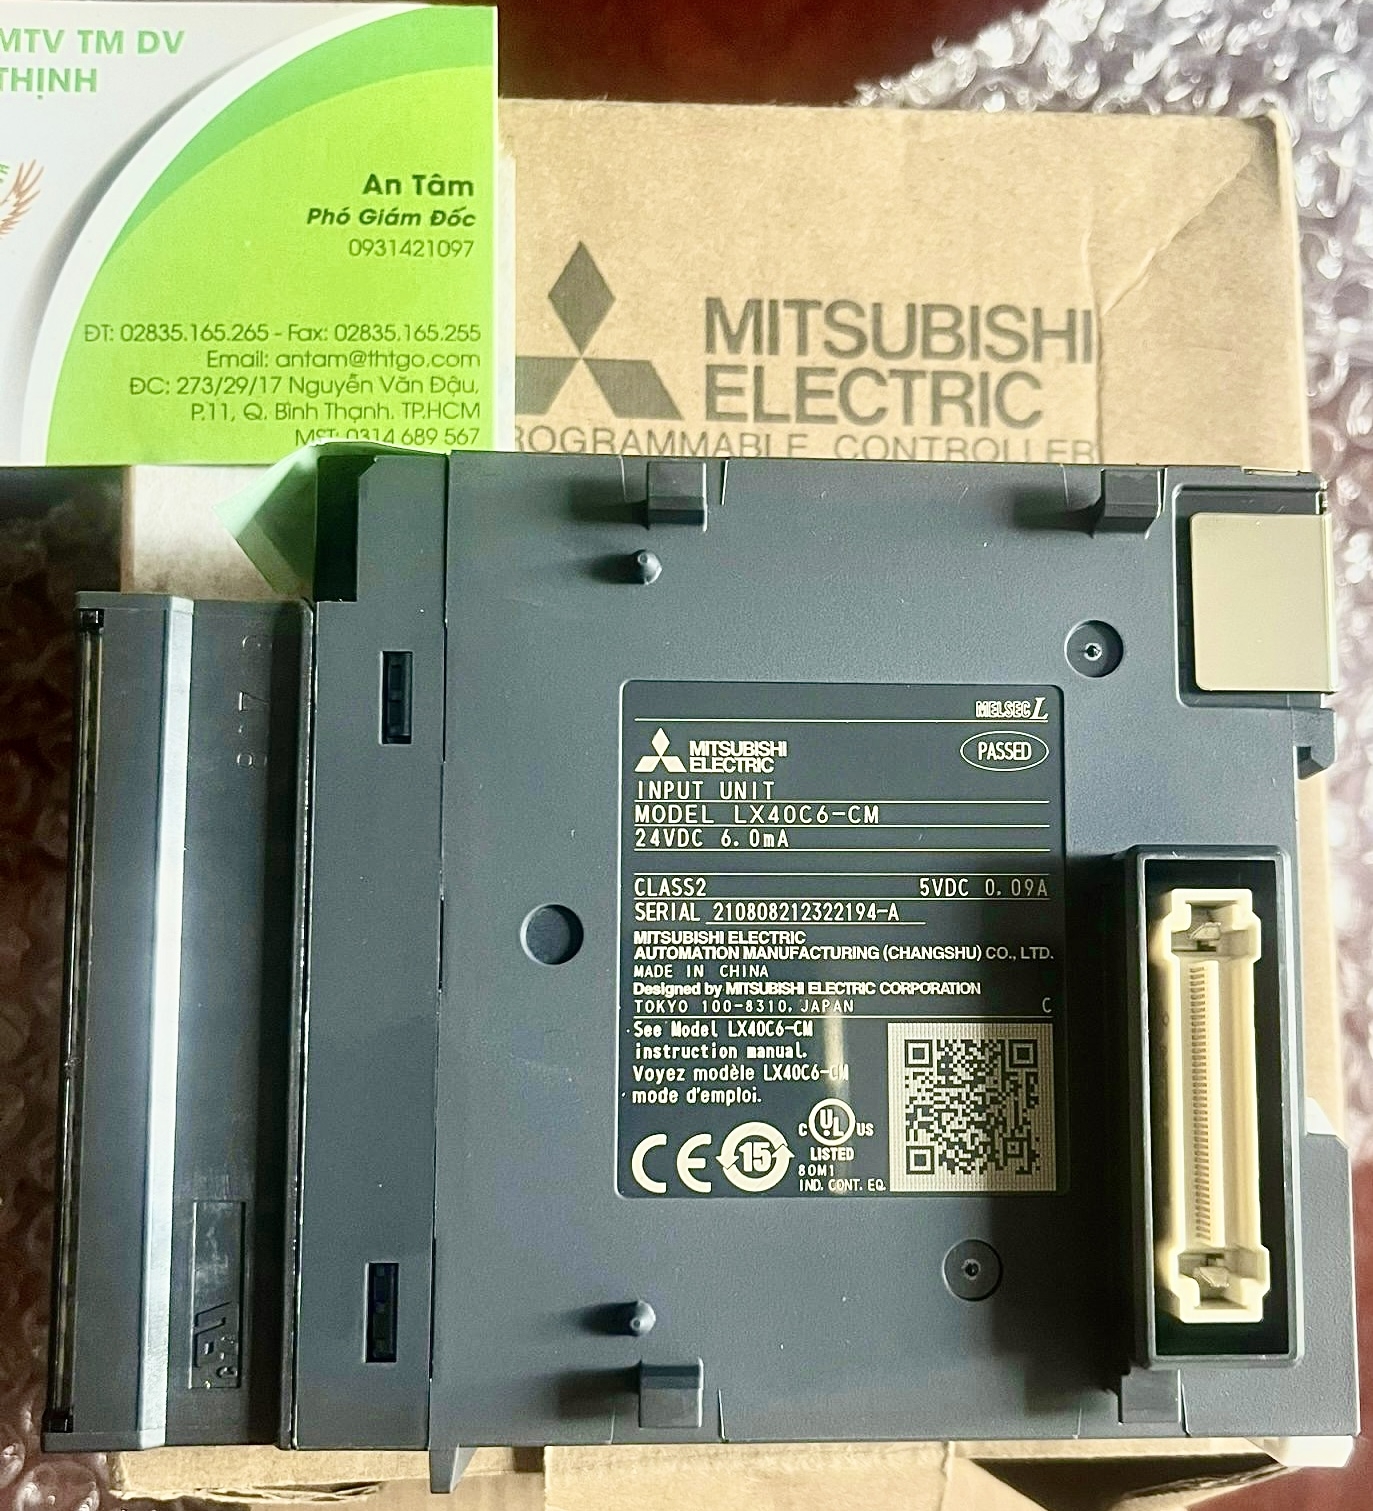 MITSUBISHI ELECTRIC LX40C6-CM